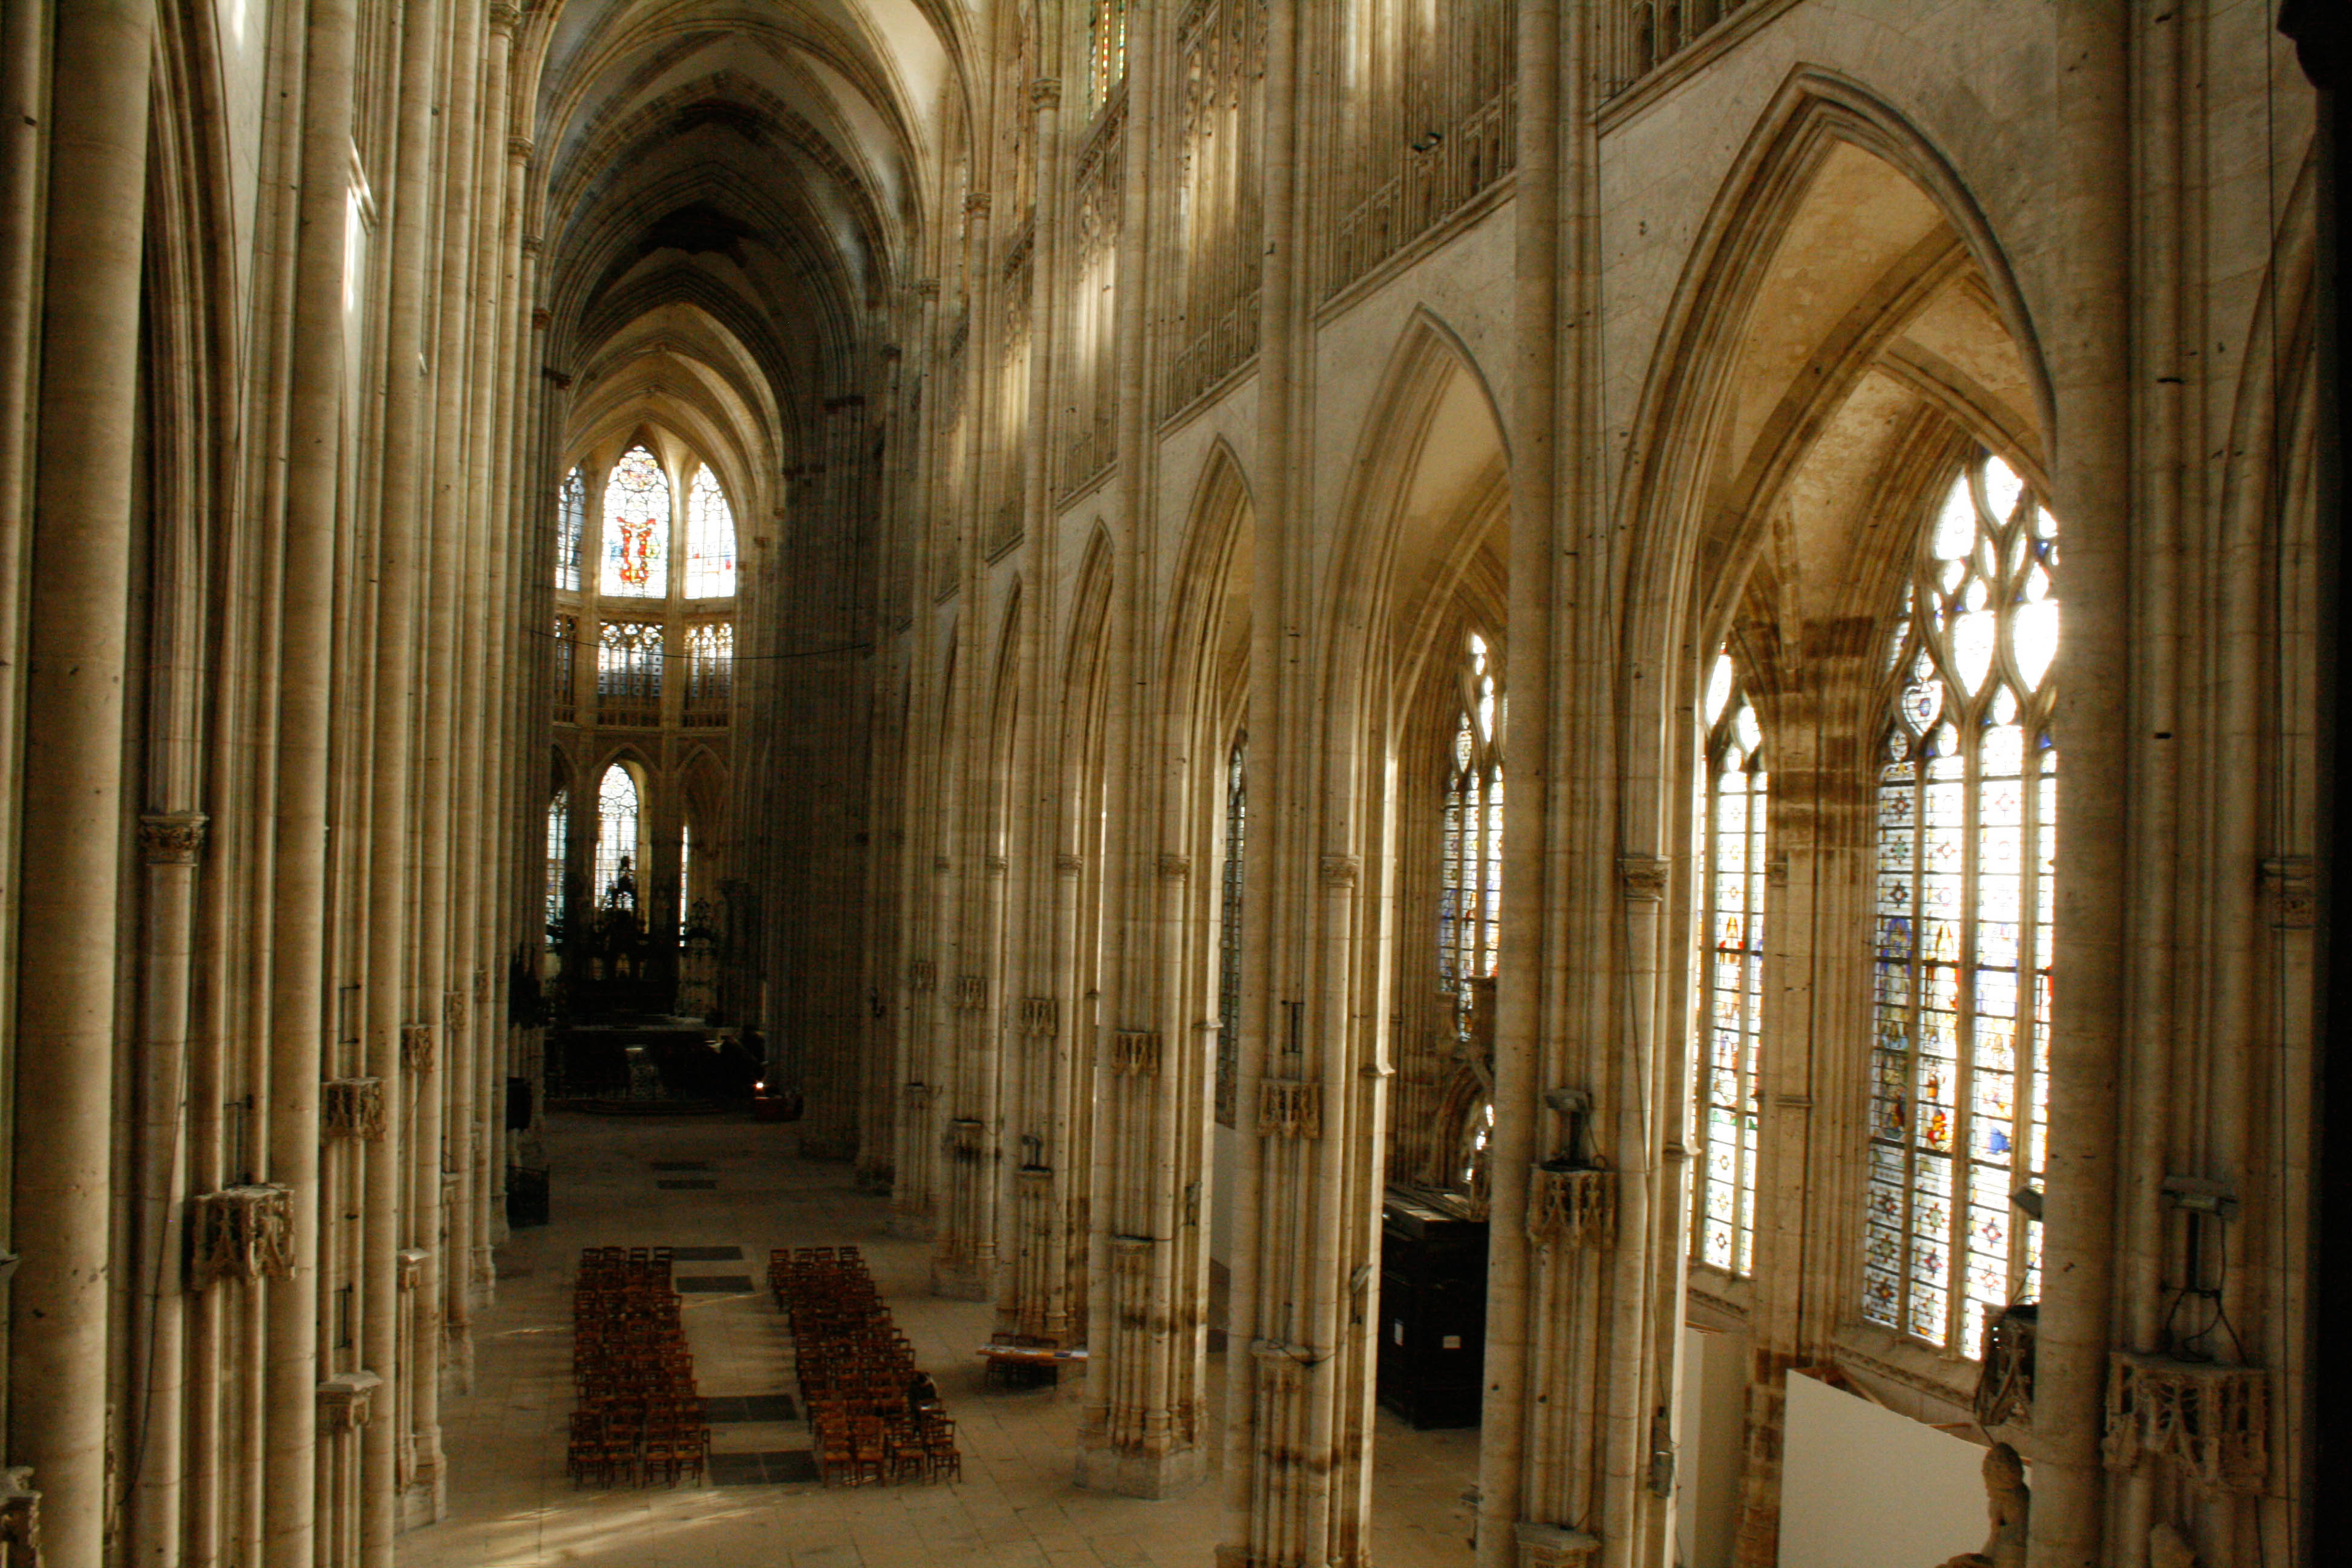 St. Ouen Abbey Church in Rouen as seen from the inside